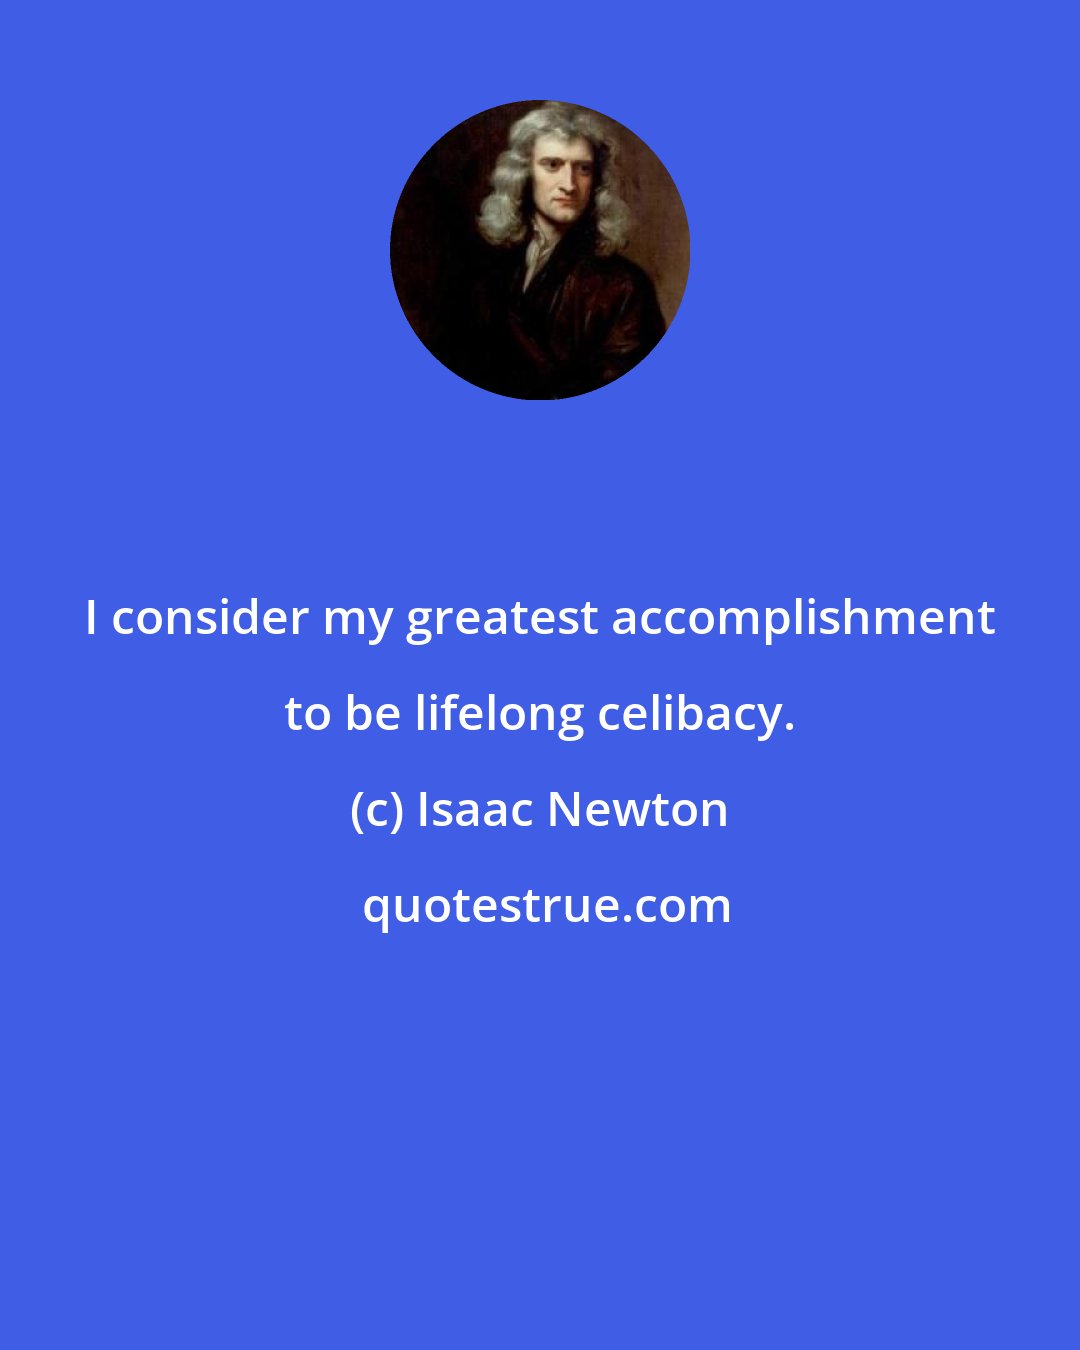 Isaac Newton: I consider my greatest accomplishment to be lifelong celibacy.